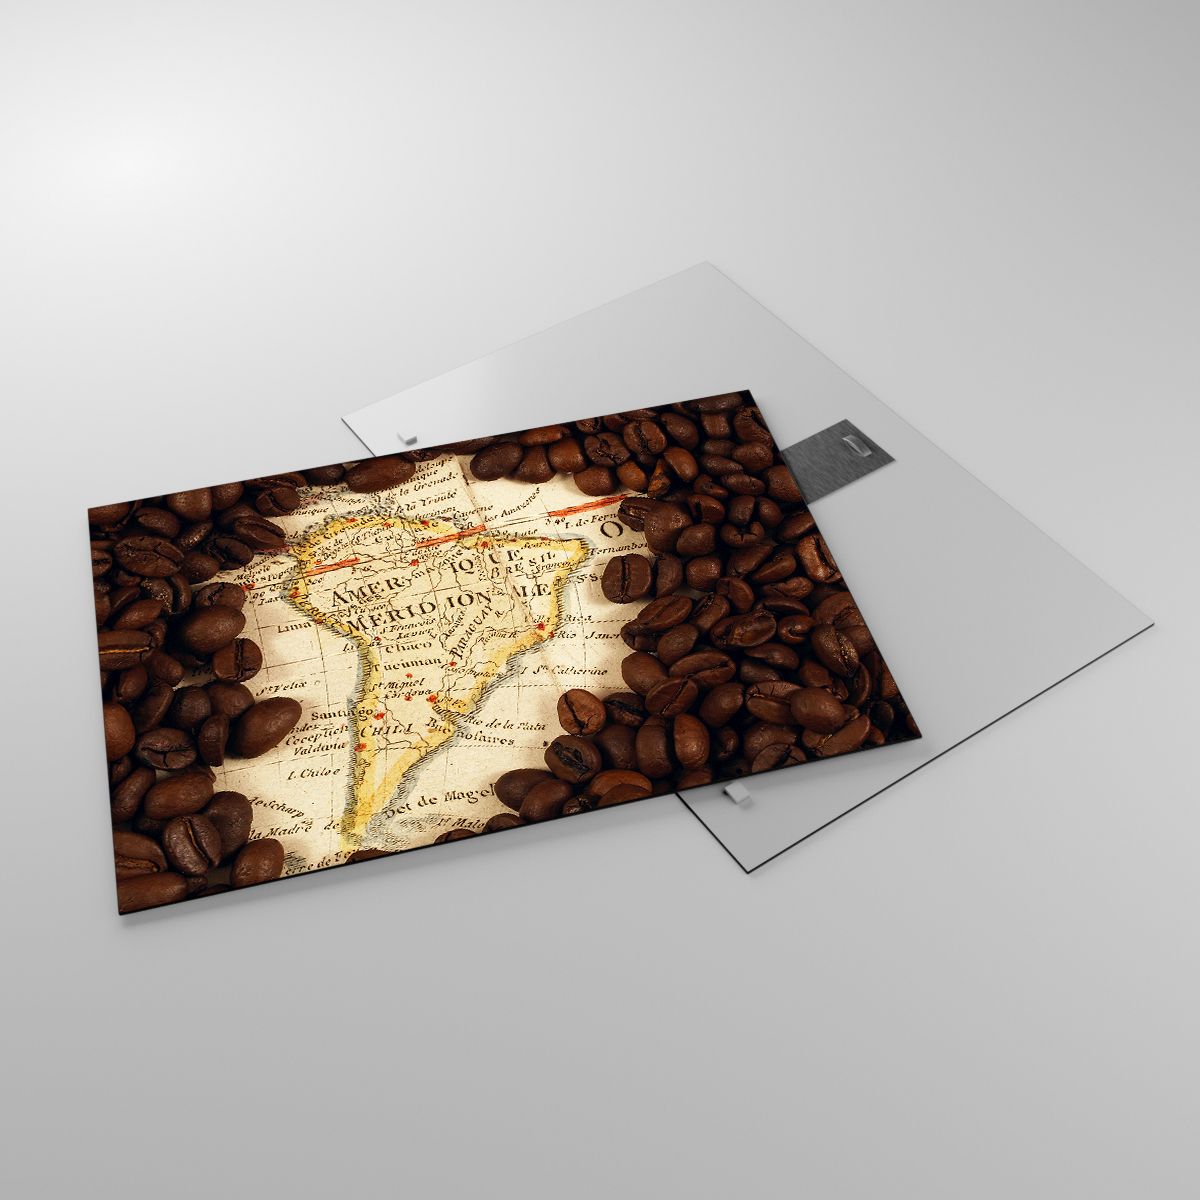 Glasbild Weltkarten, Glasbild Kaffee, Glasbild Amerika, Glasbild Reisen, Glasbild Kaffeebohnen